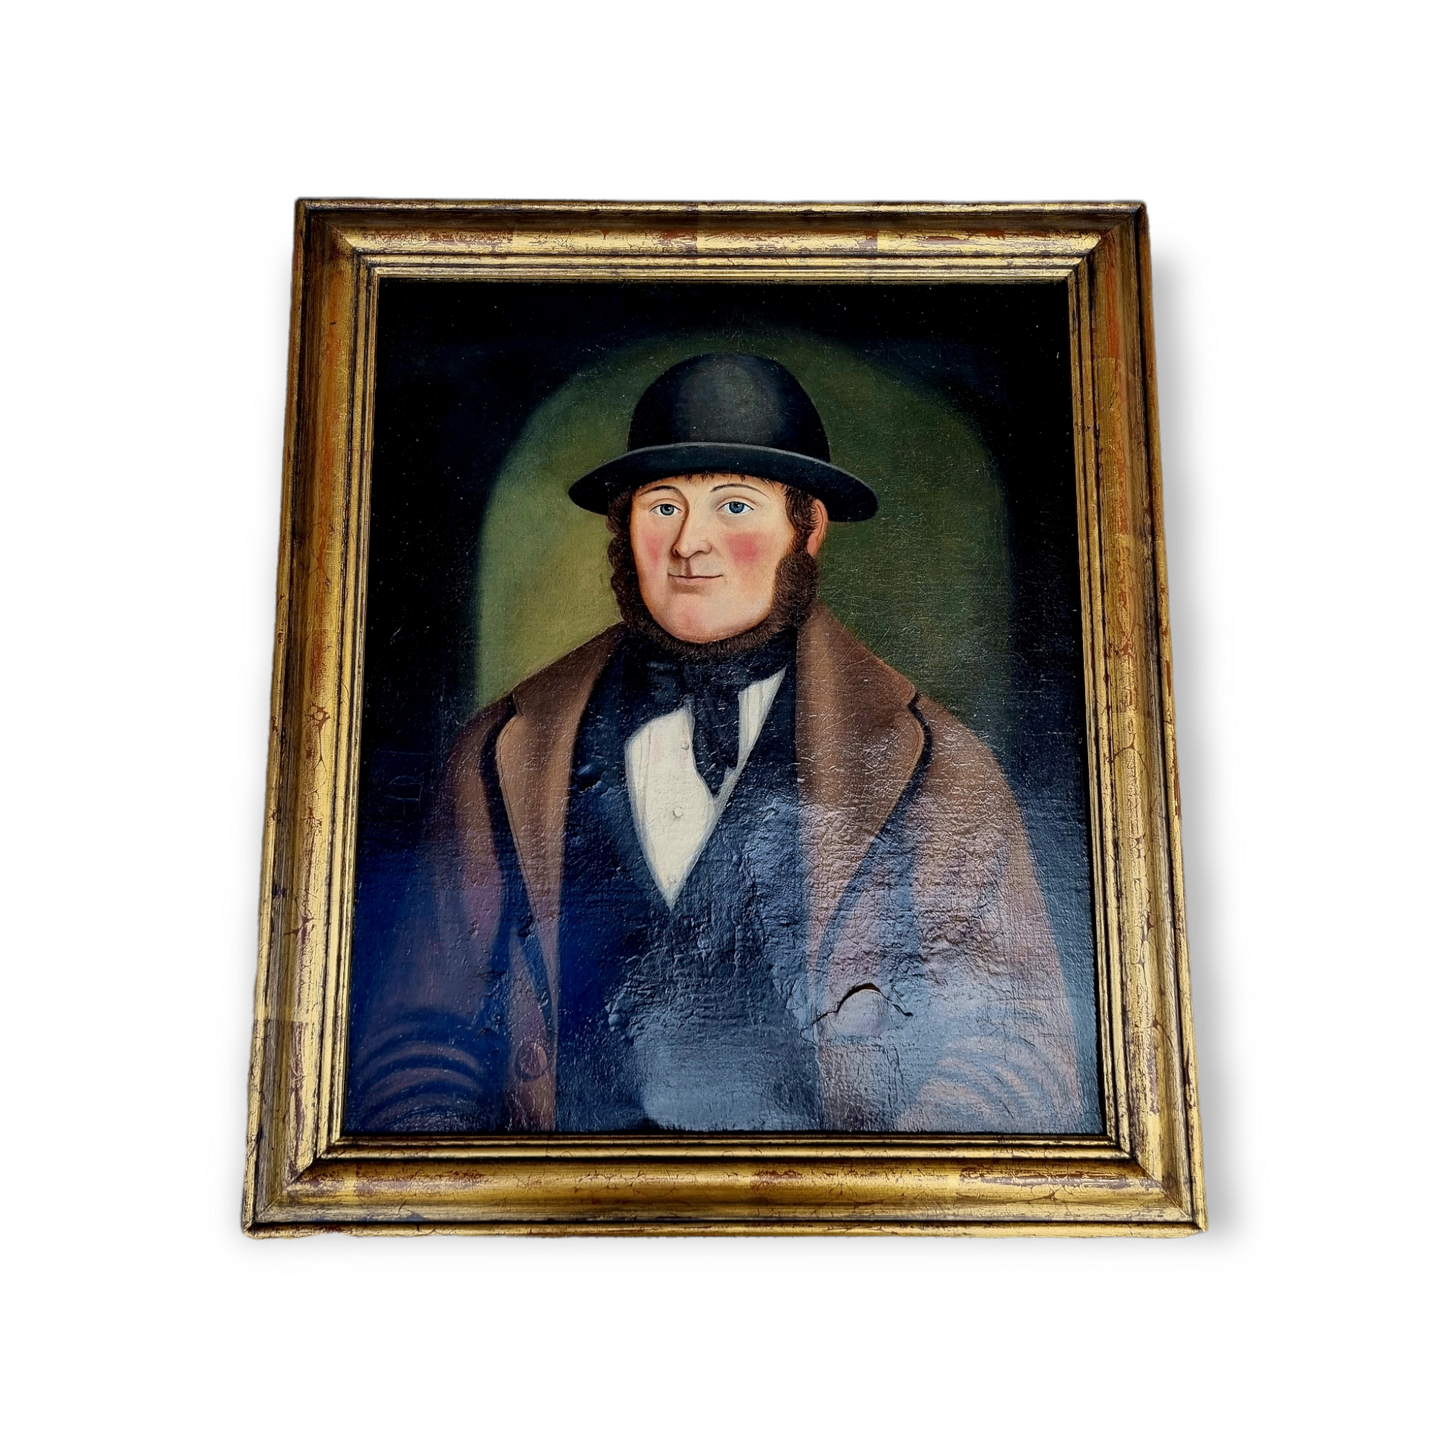 19th Century Primitive / Naïve English School Antique Oil On Canvas Portrait Of A Squire Wearing A Bowler Hat